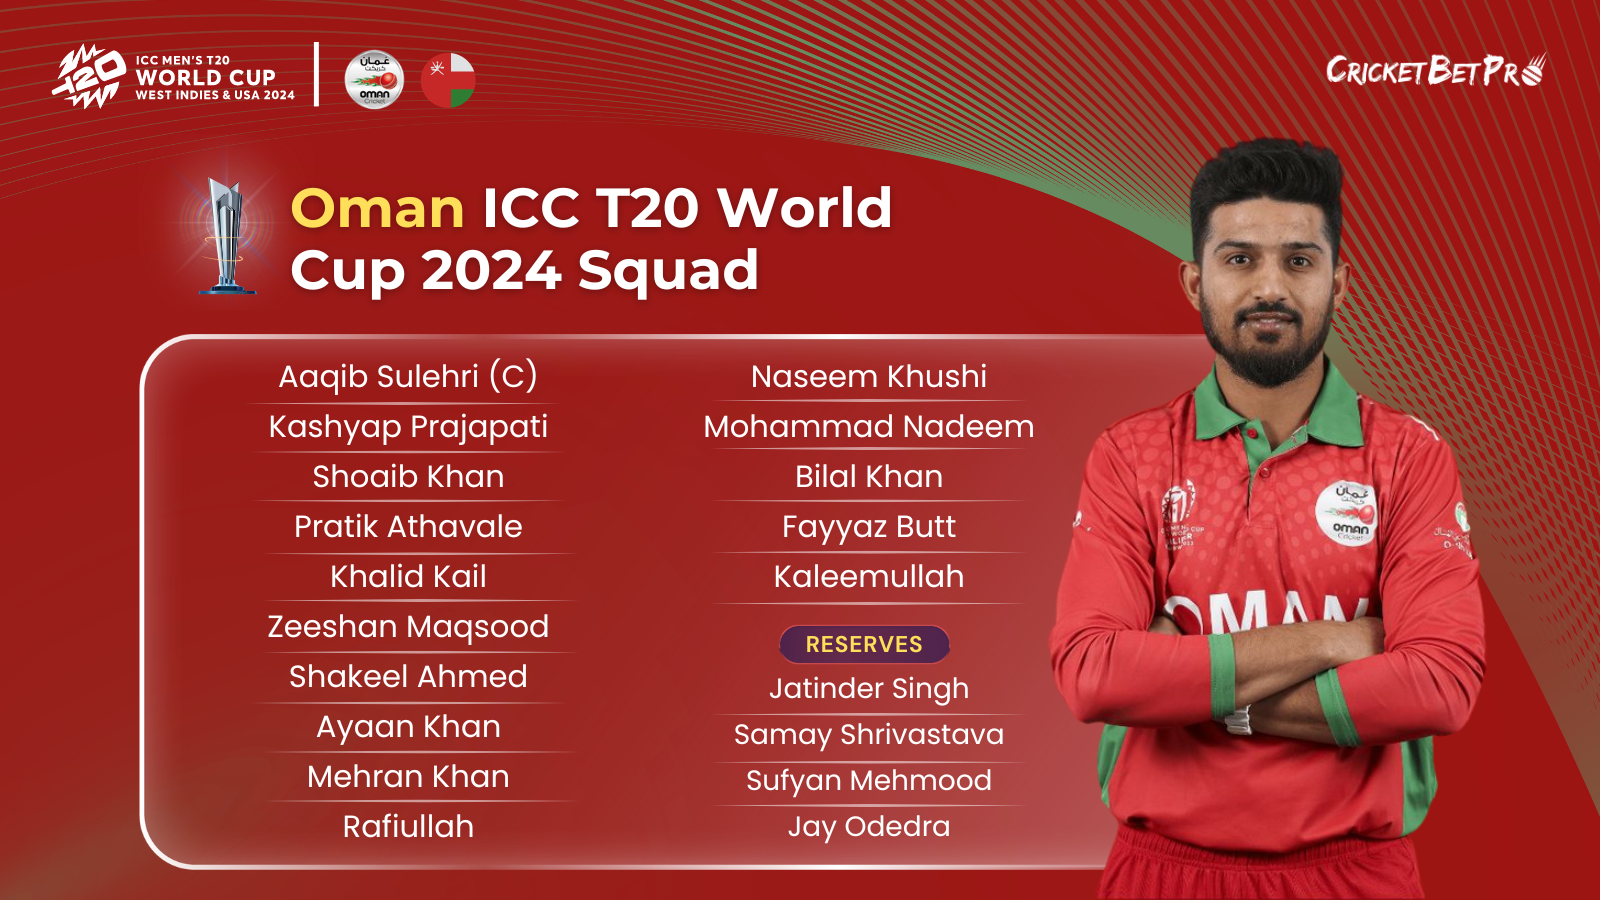 Oman ICC T20 World Cup 2024 Squad